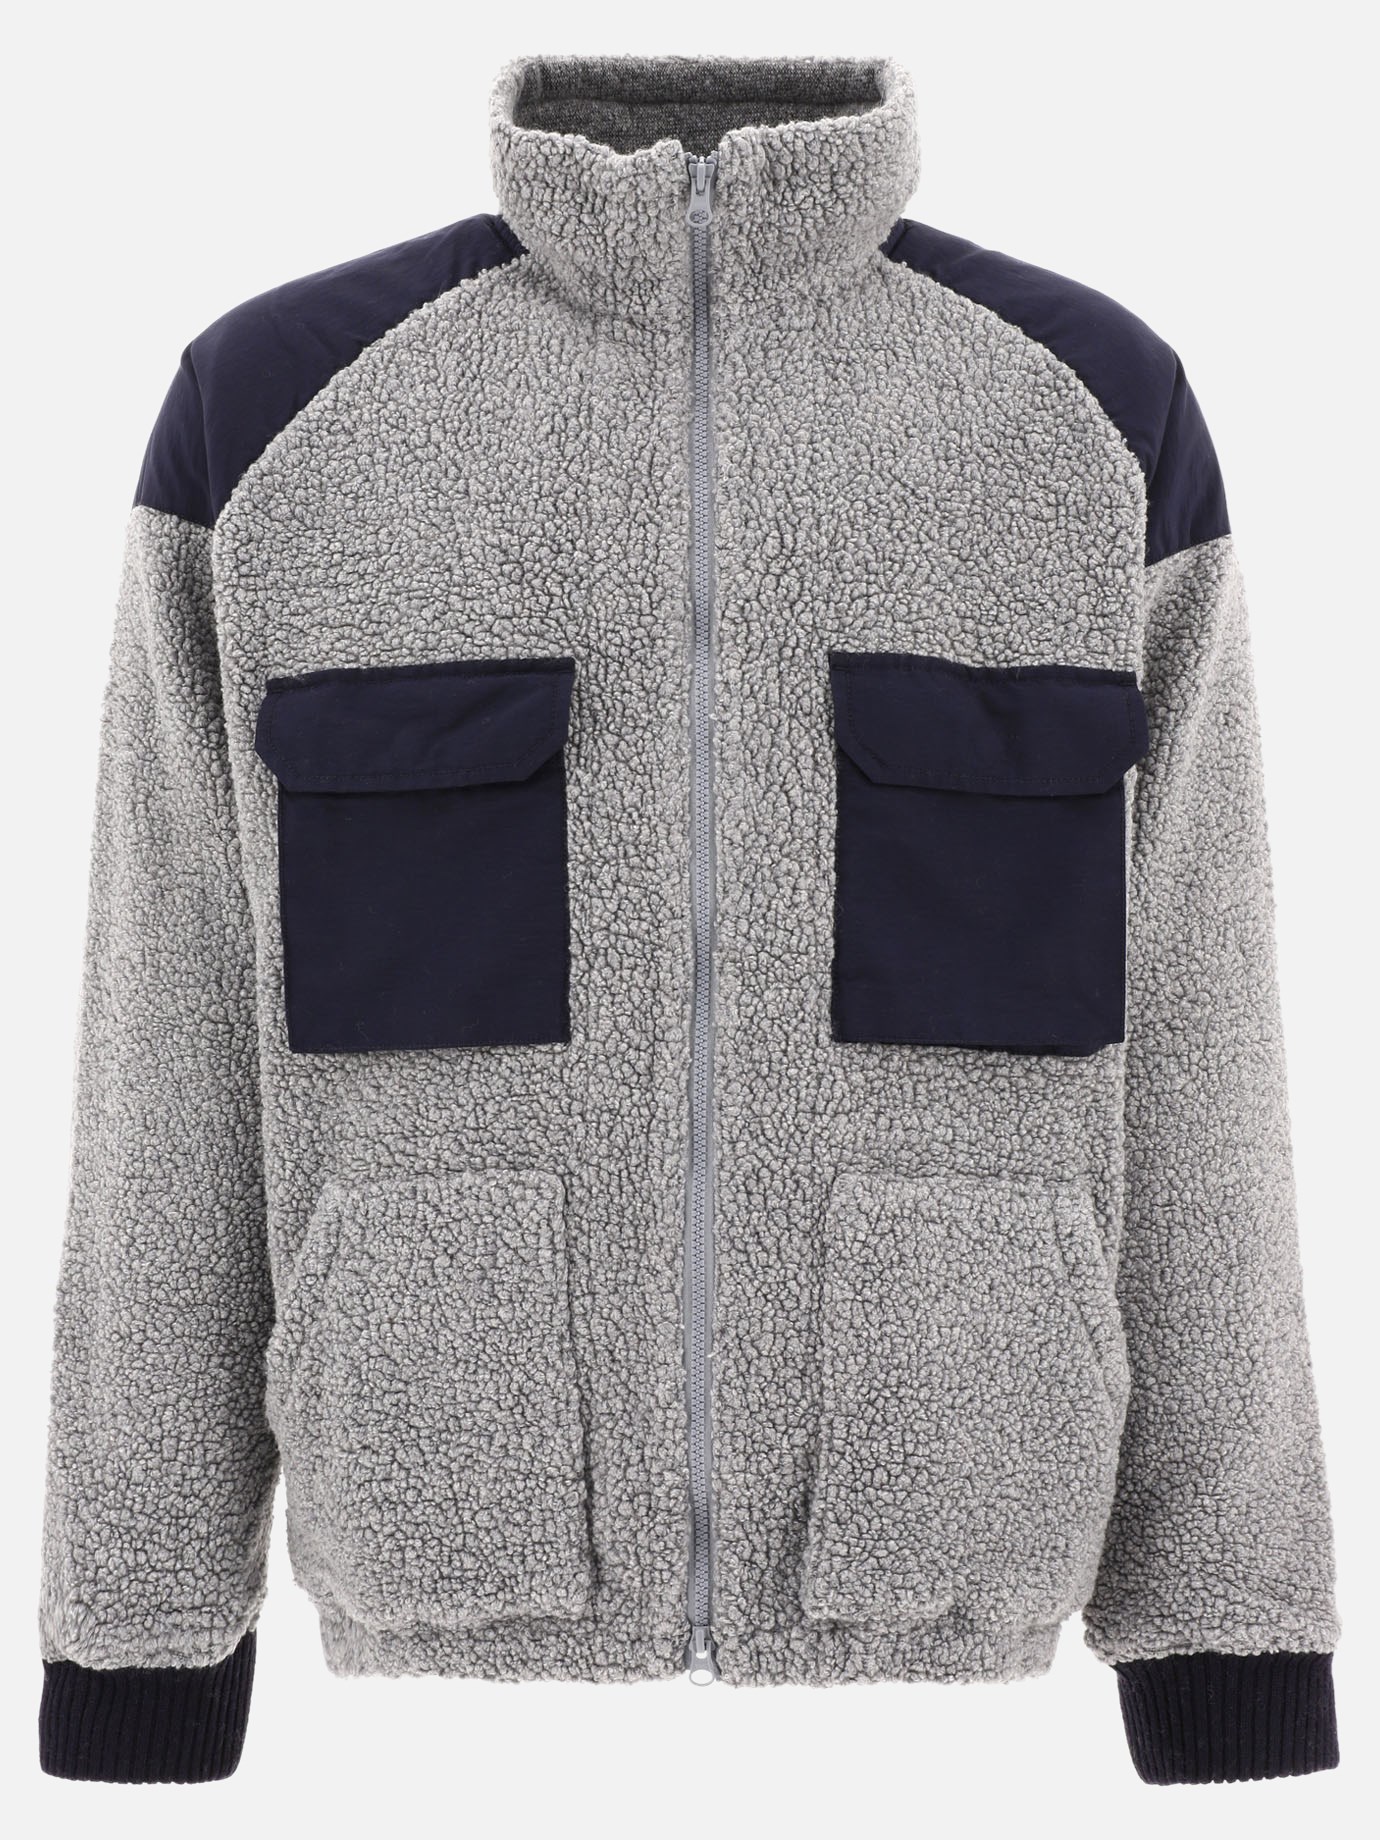 Fleece jacket with contrasting details